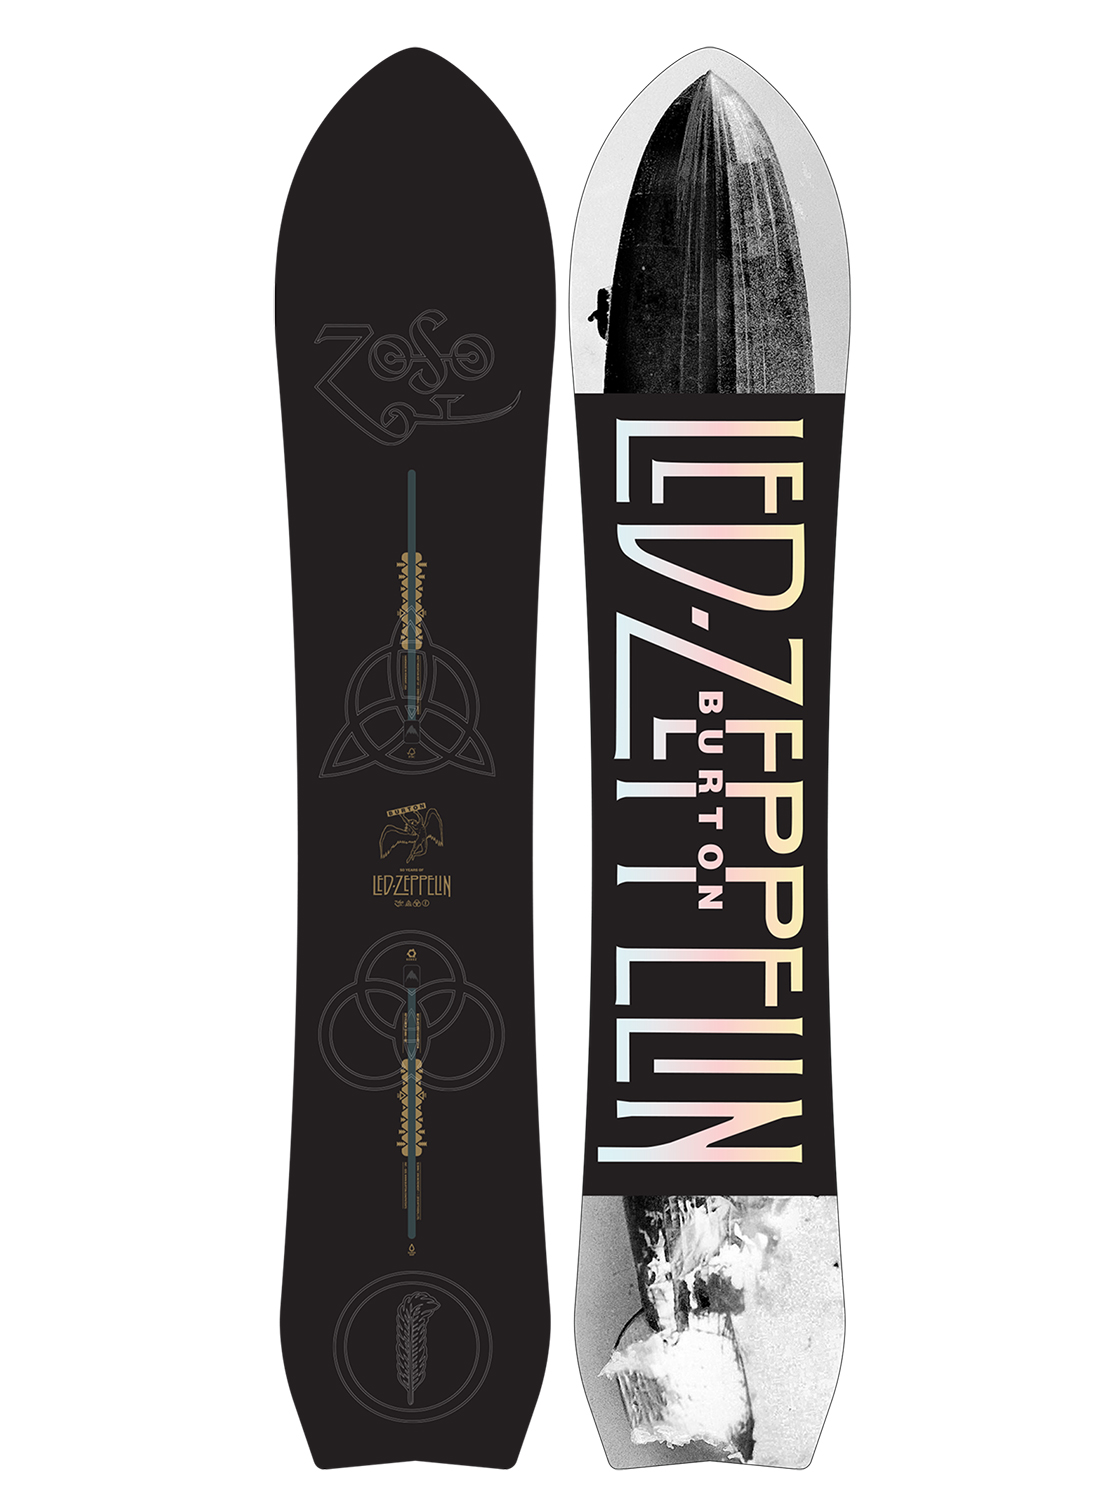 Led Zeppelin x Burton Misty Mountain Hop Snowboard